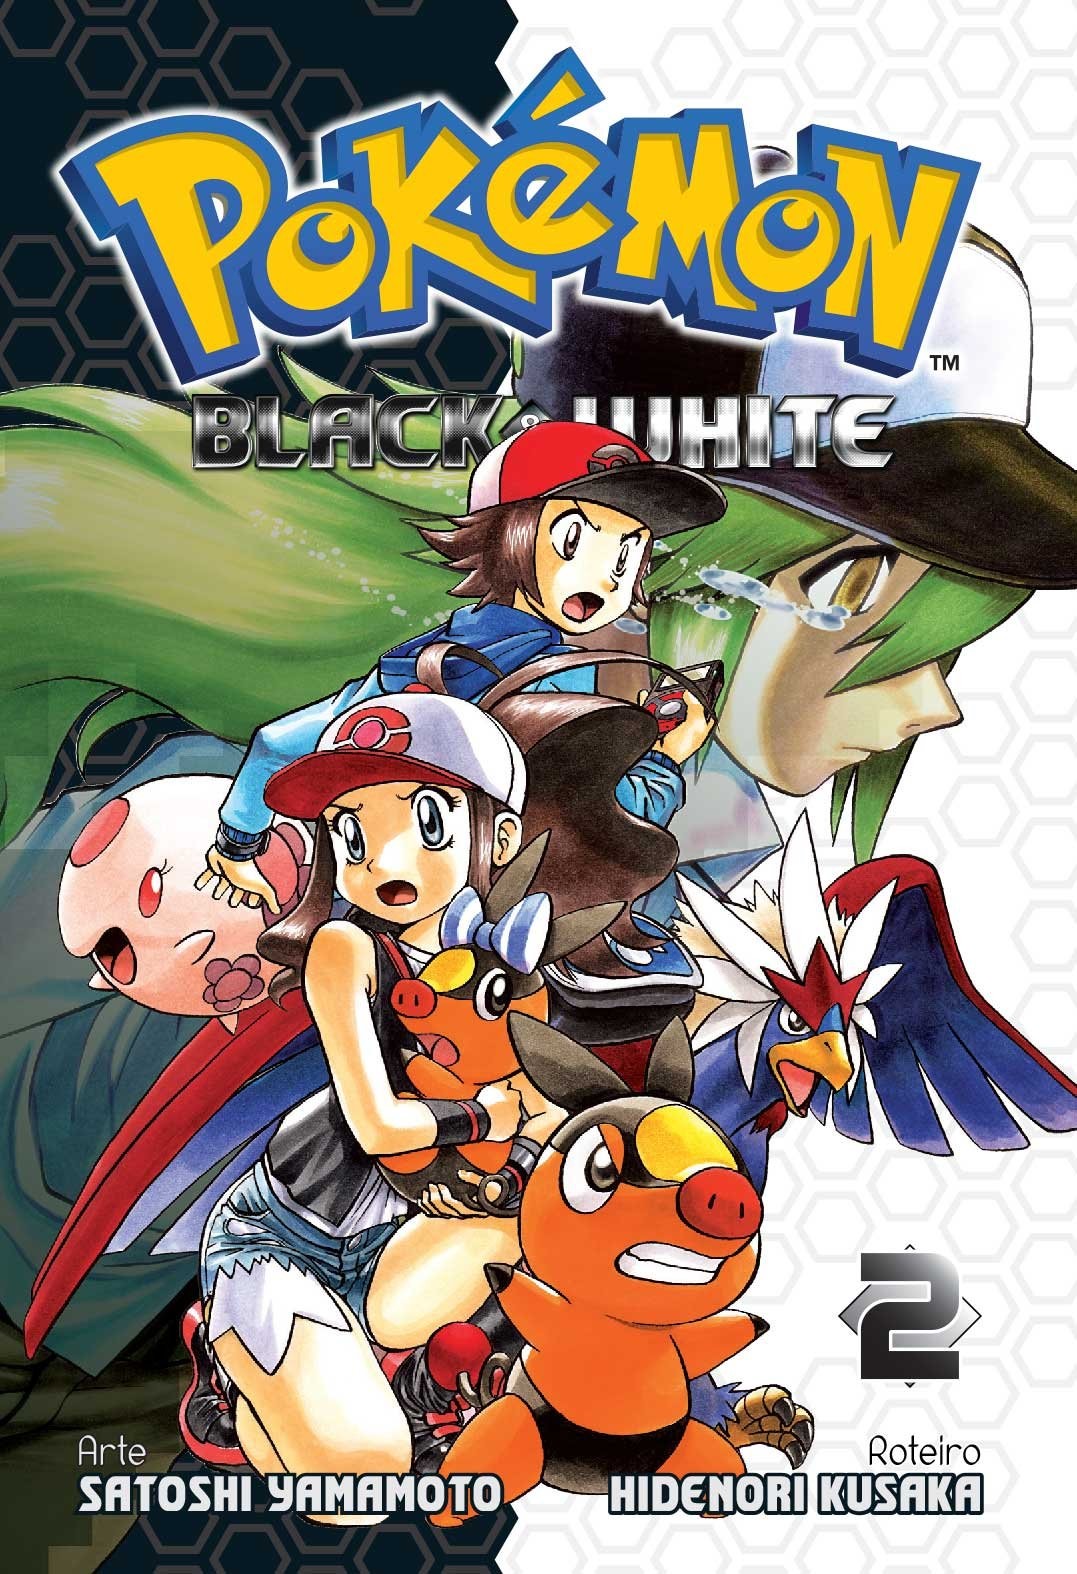 Pokémon Black & White nº 02 de 09